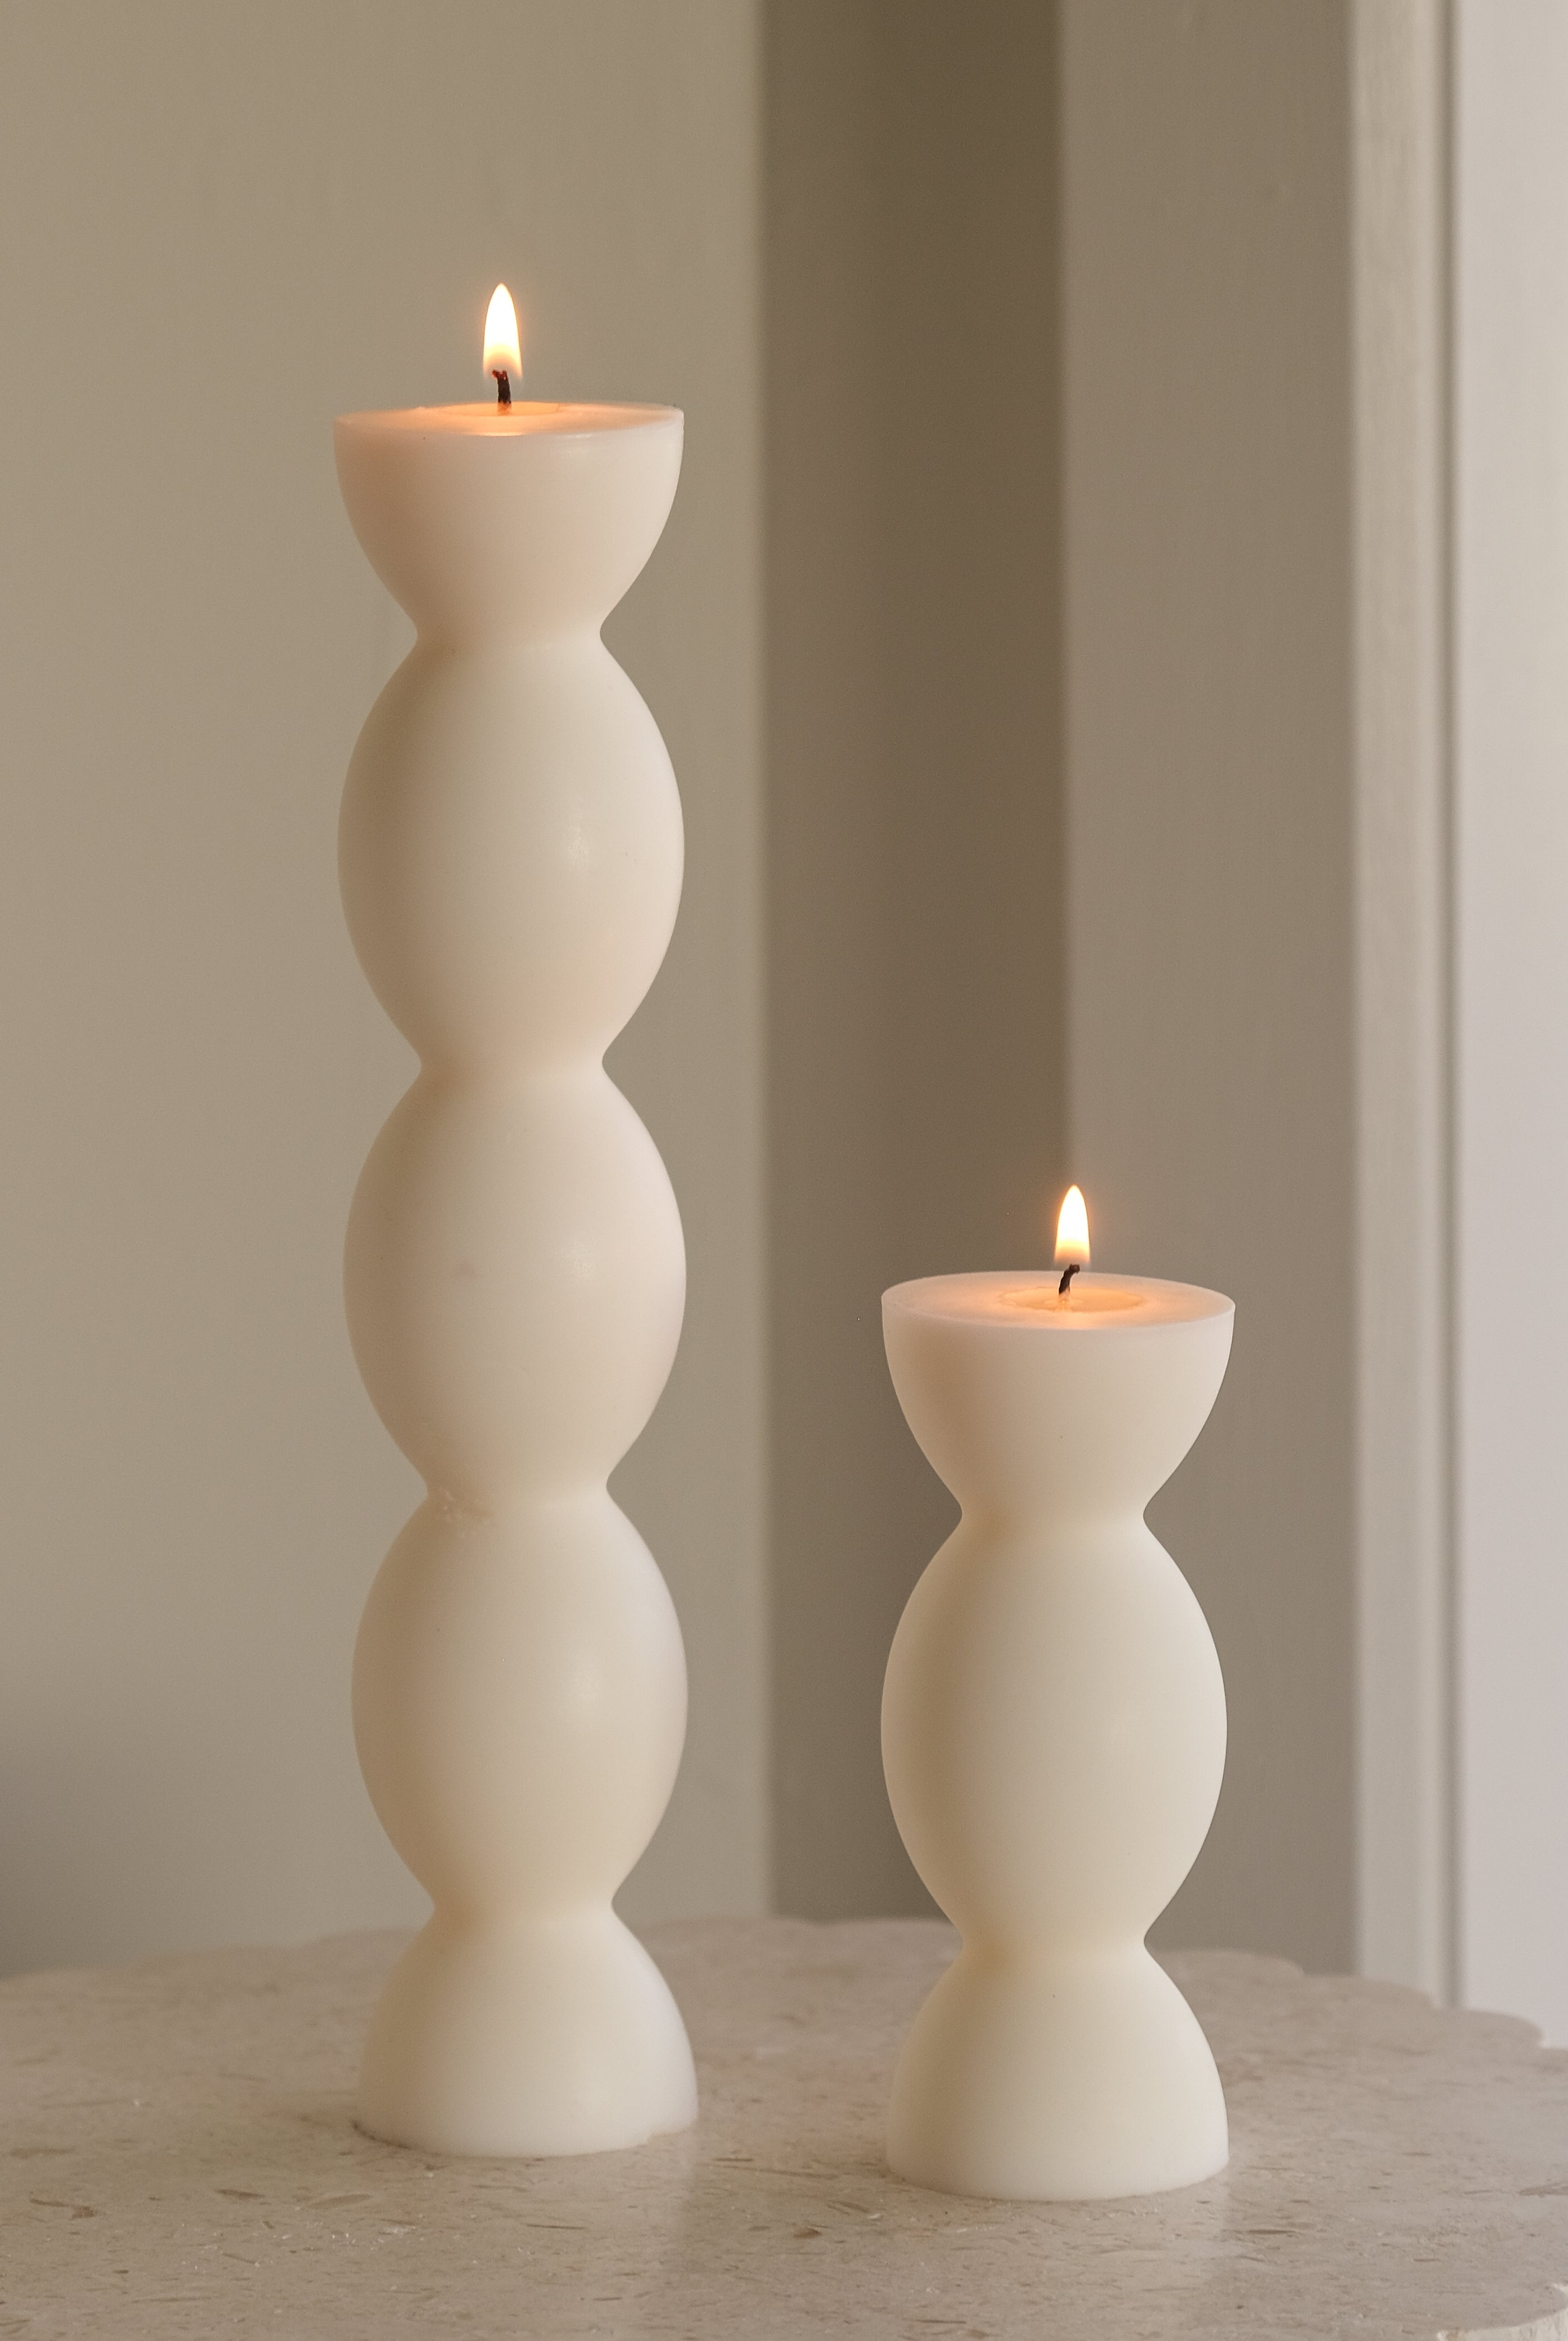 Pillar candle moulds